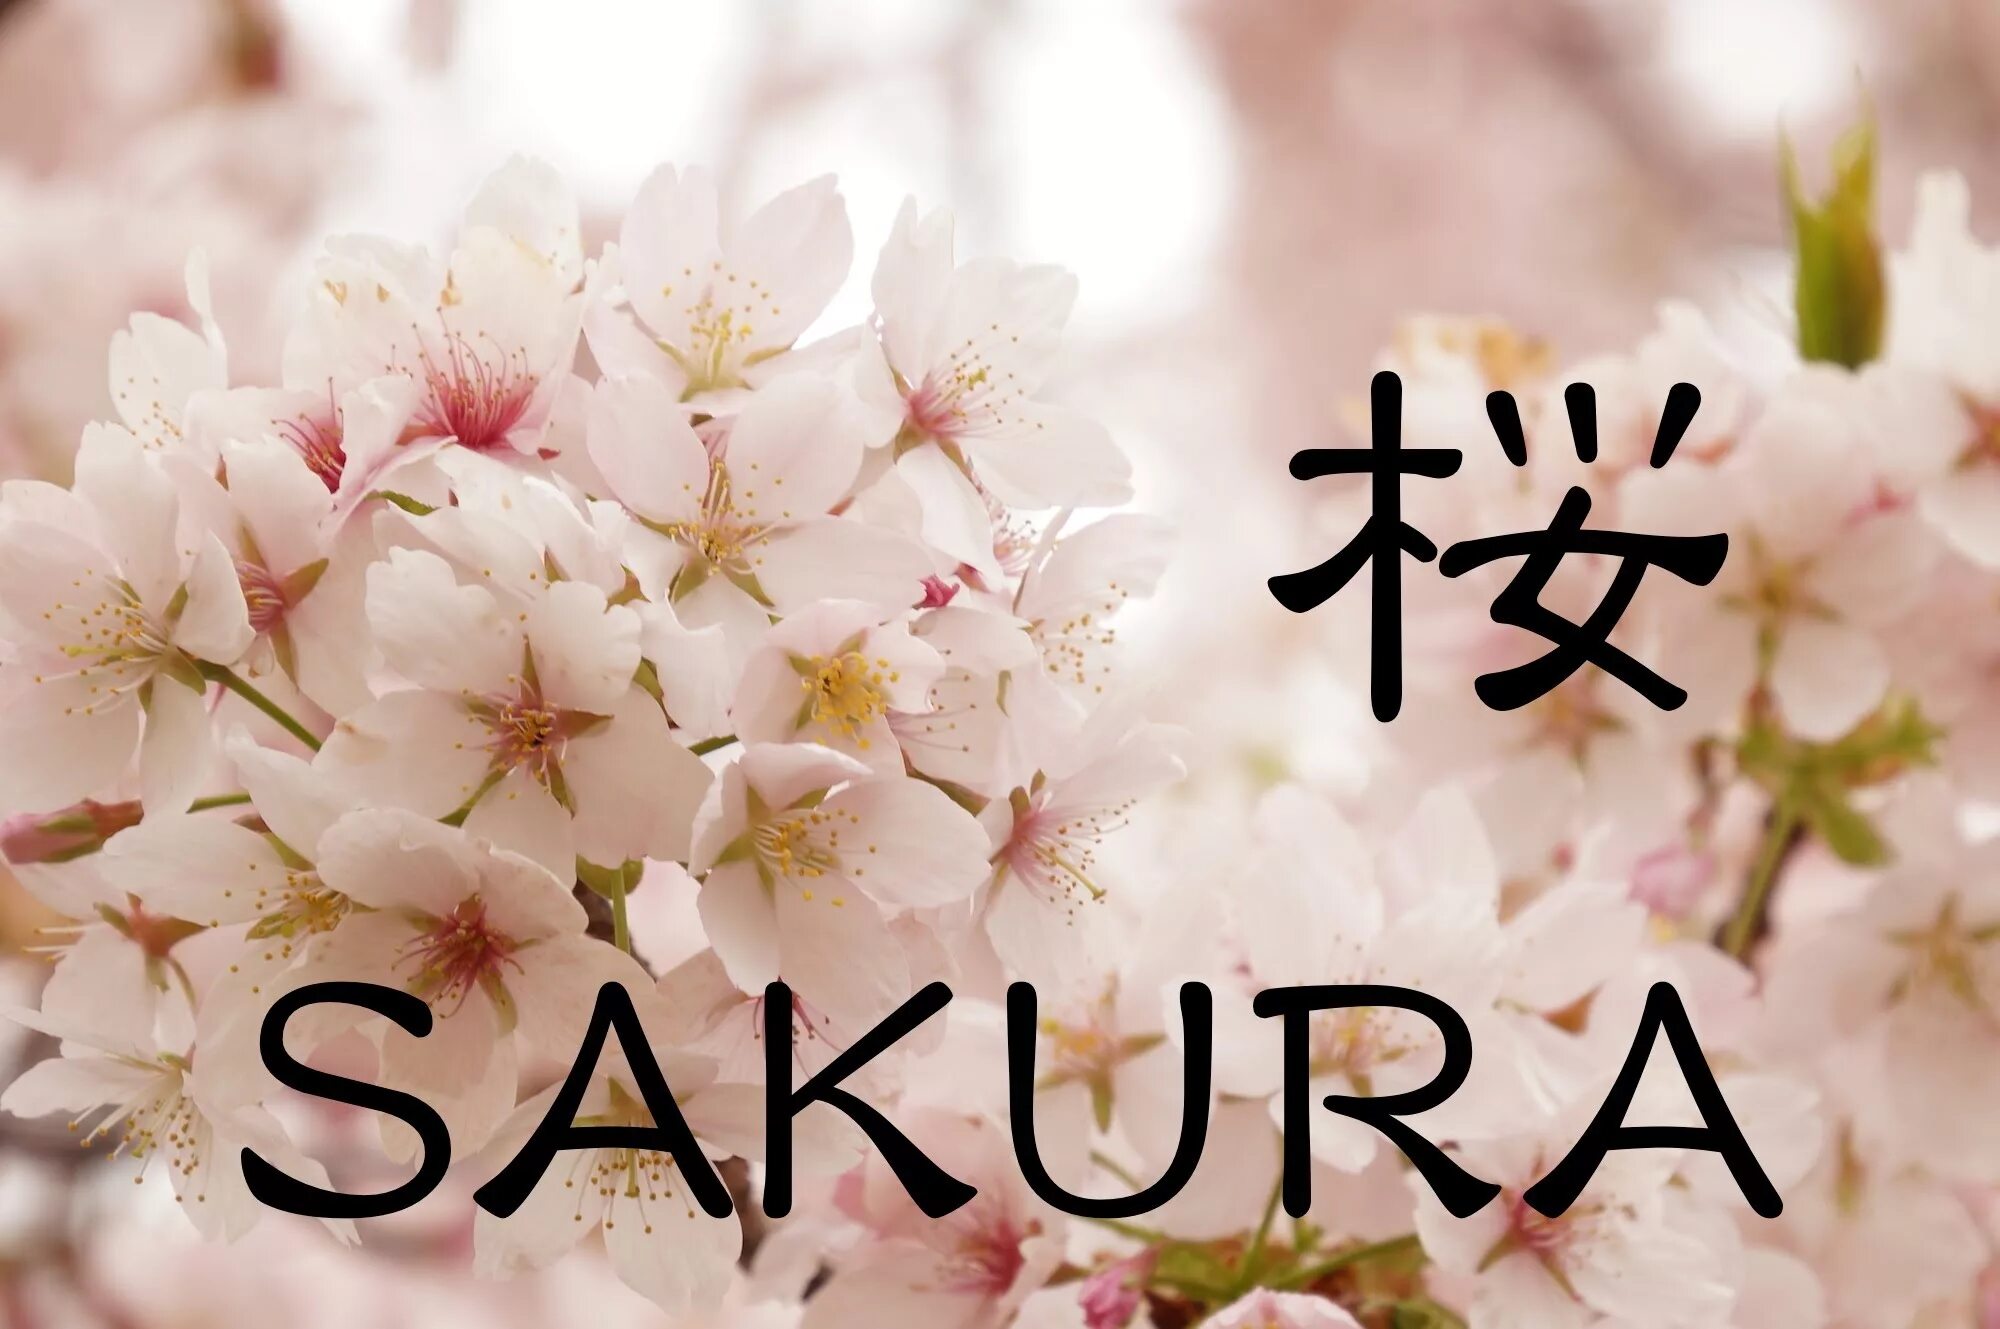 Сакура надпись. Сакура имя. Японская Сакура. Иероглиф Сакура. Сакура sakura